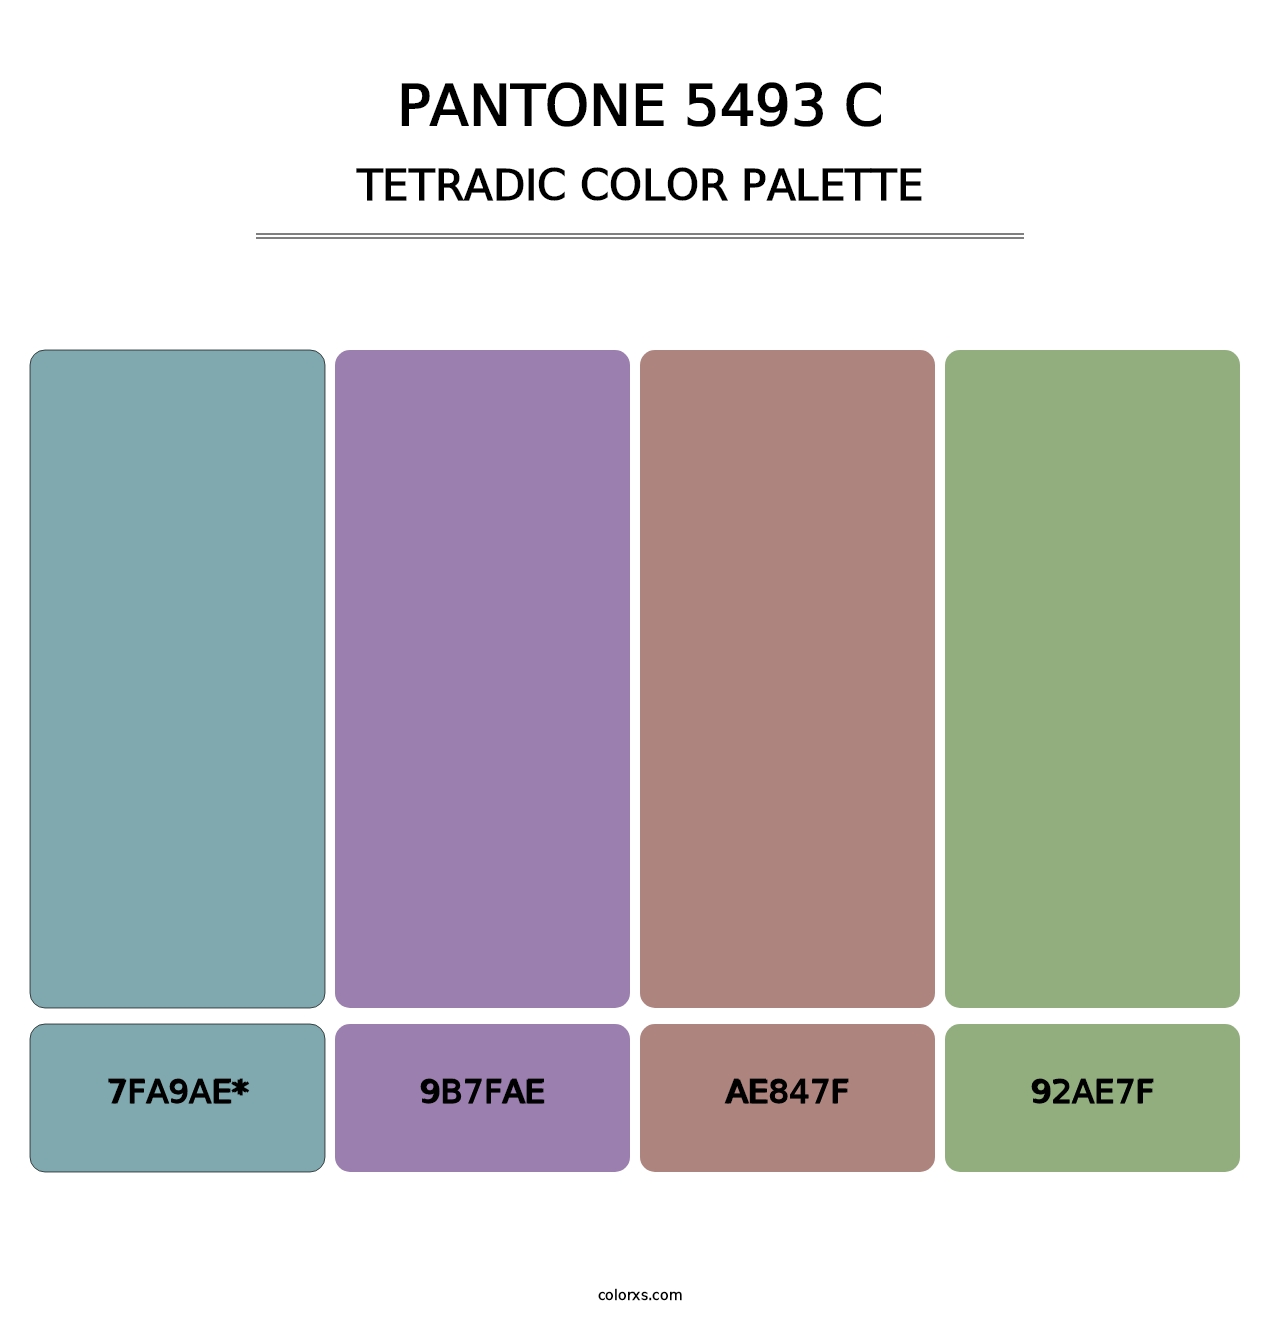 PANTONE 5493 C - Tetradic Color Palette